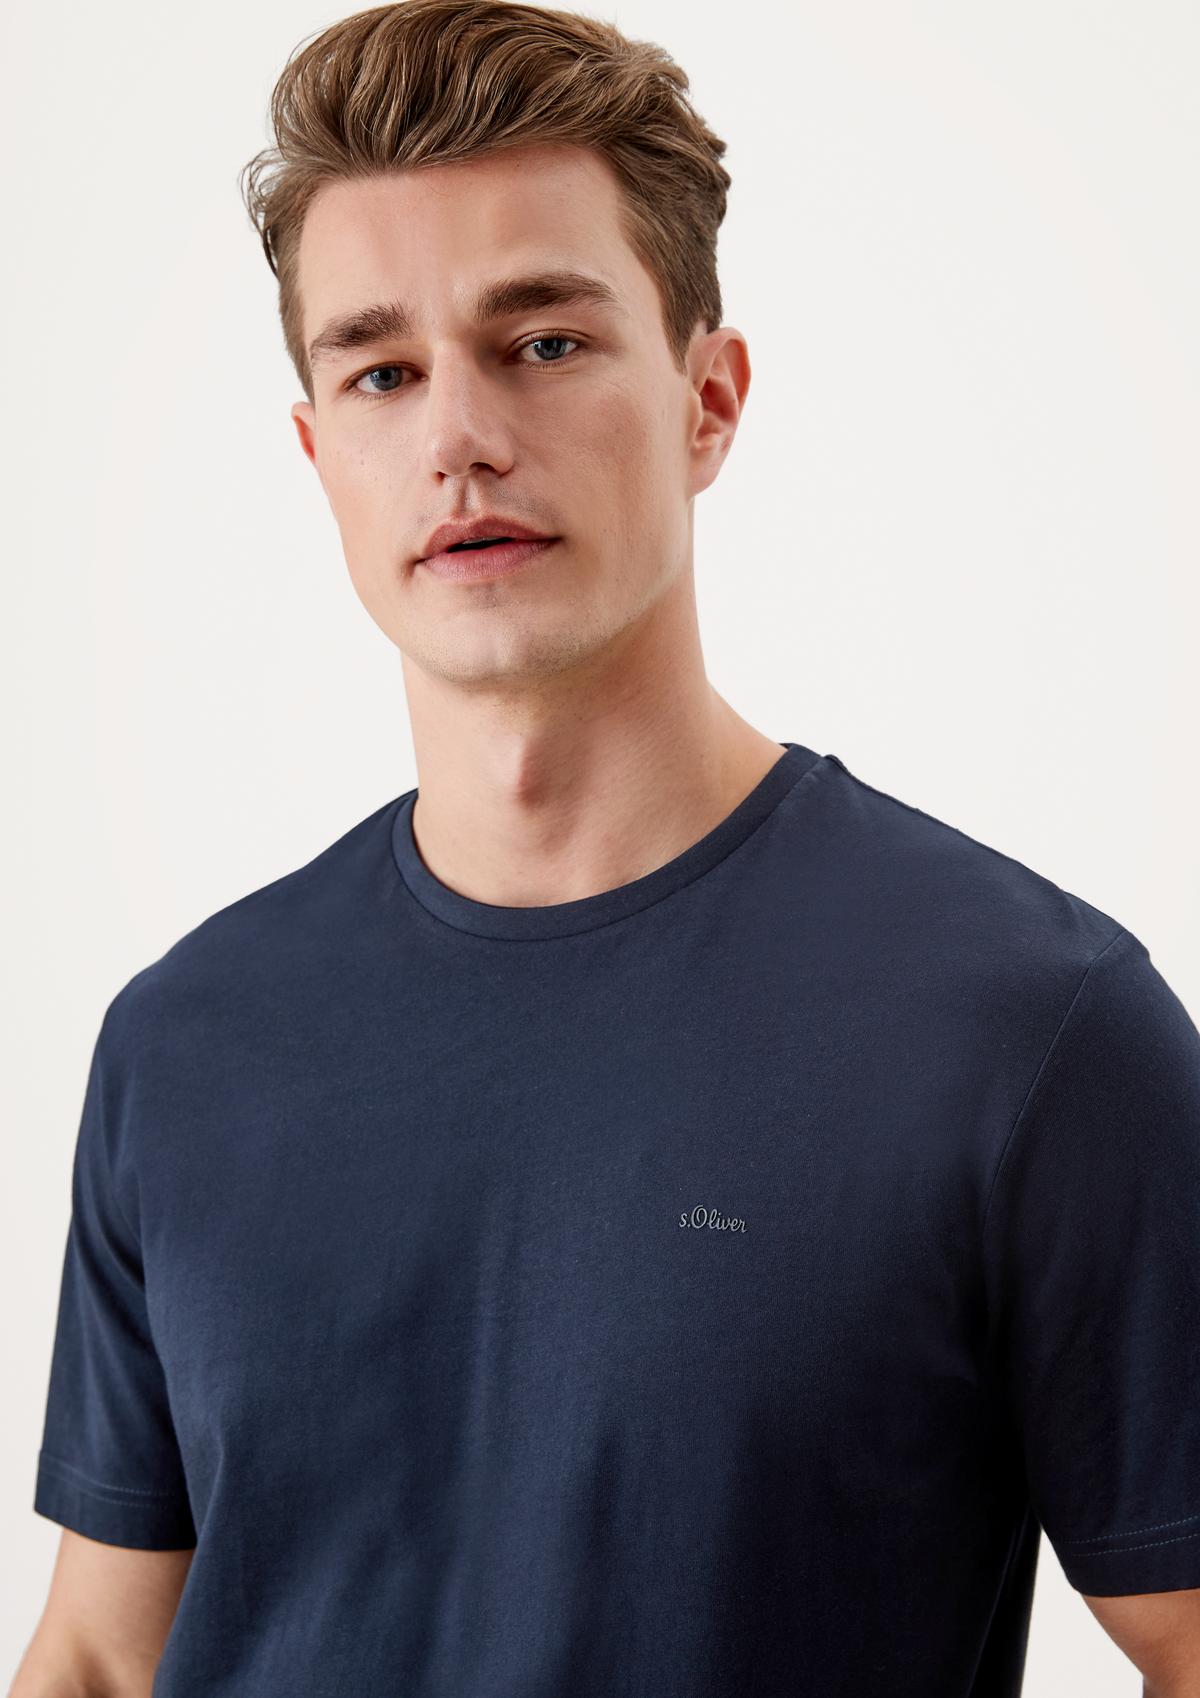 Basic Sleeves Long & for Men T-Shirts